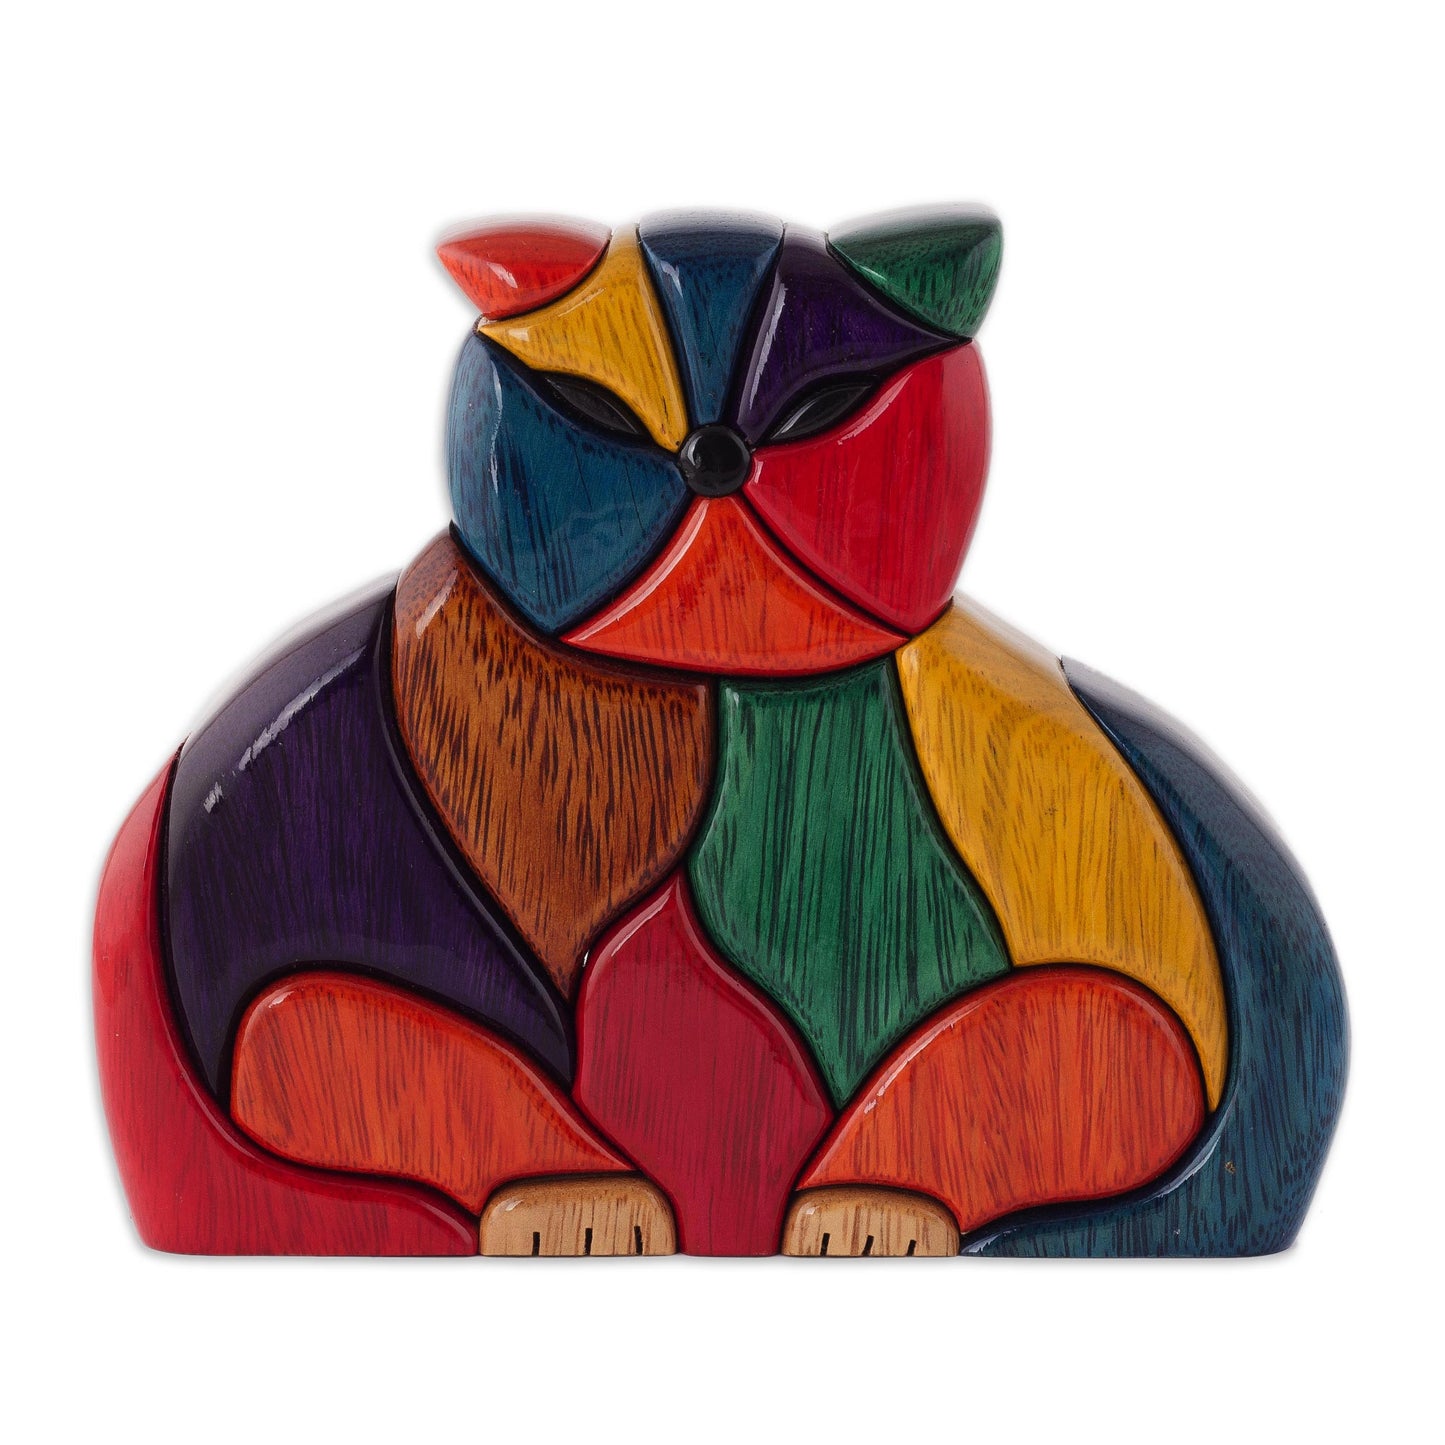 Patchwork Cat Multicolor Ishpingo Wood Sculpture